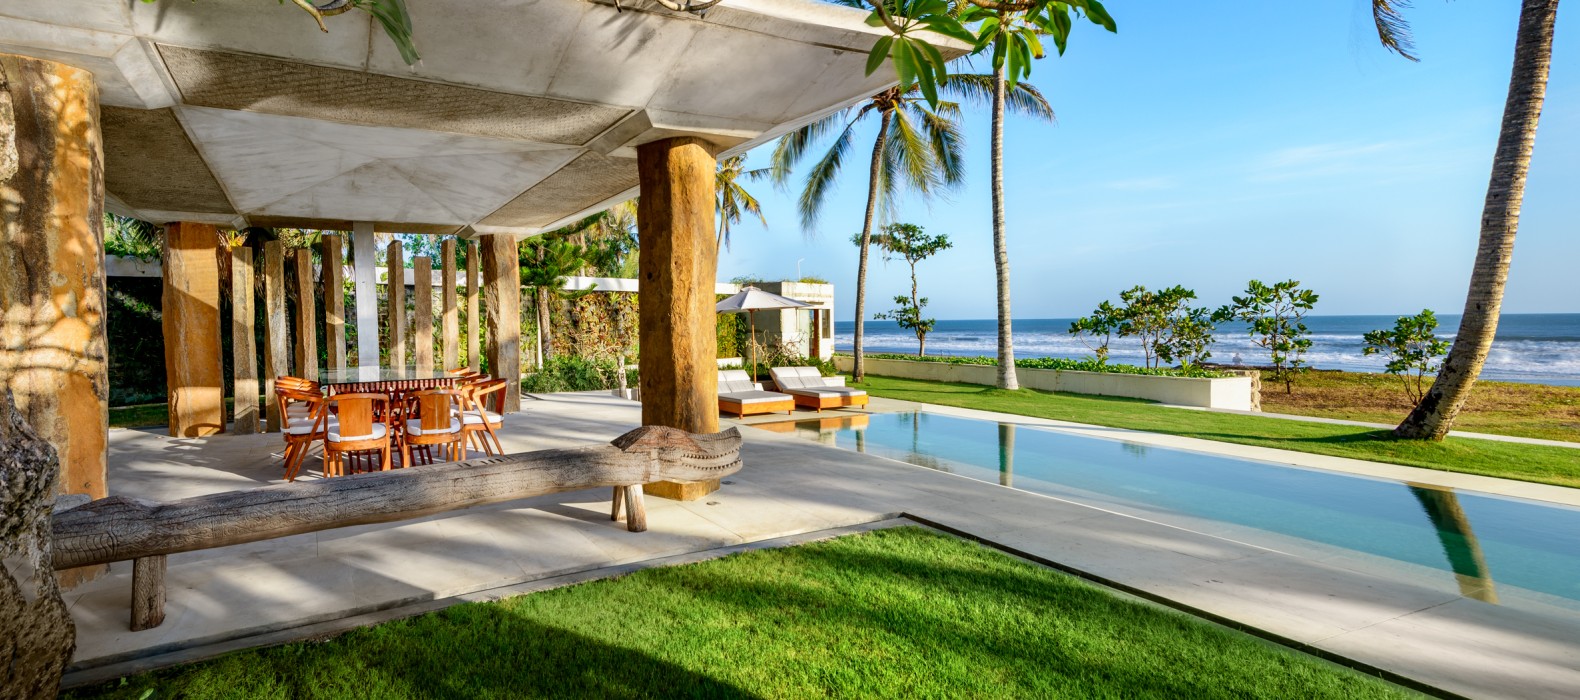 Exterior pool view of Villa La Vela in Bali